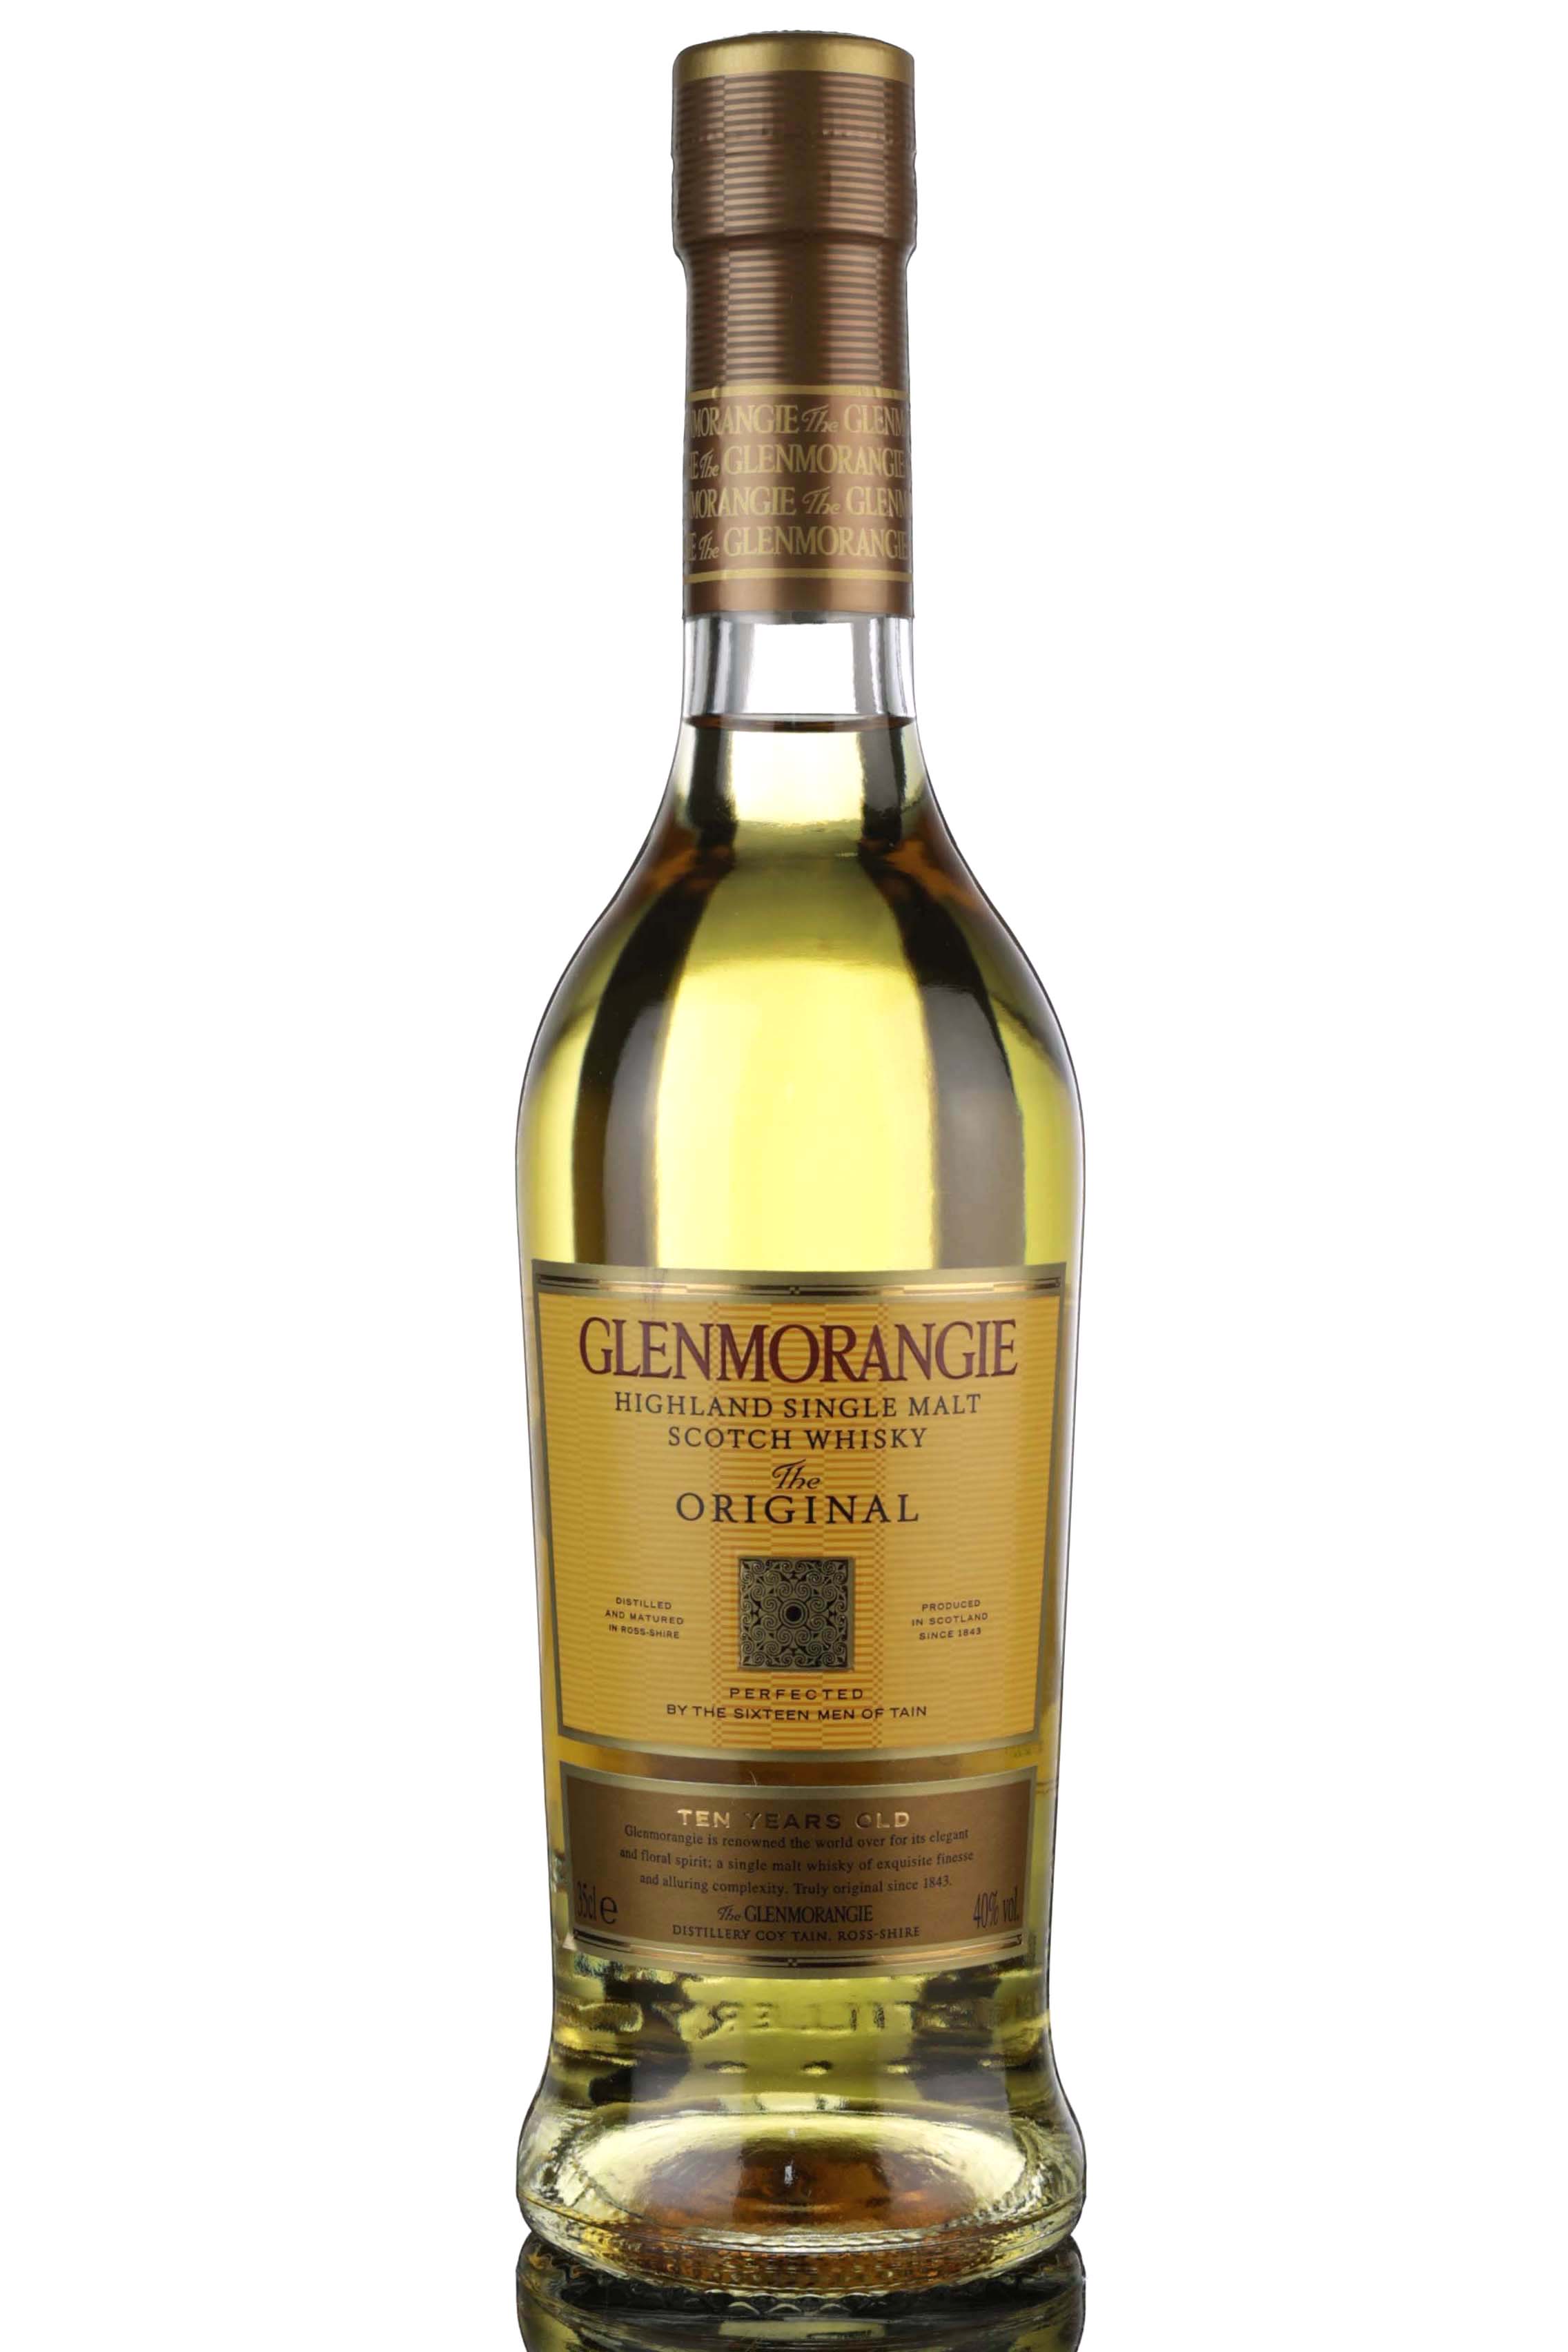 Glenmorangie 10 Year Old - The Original - Half Bottle